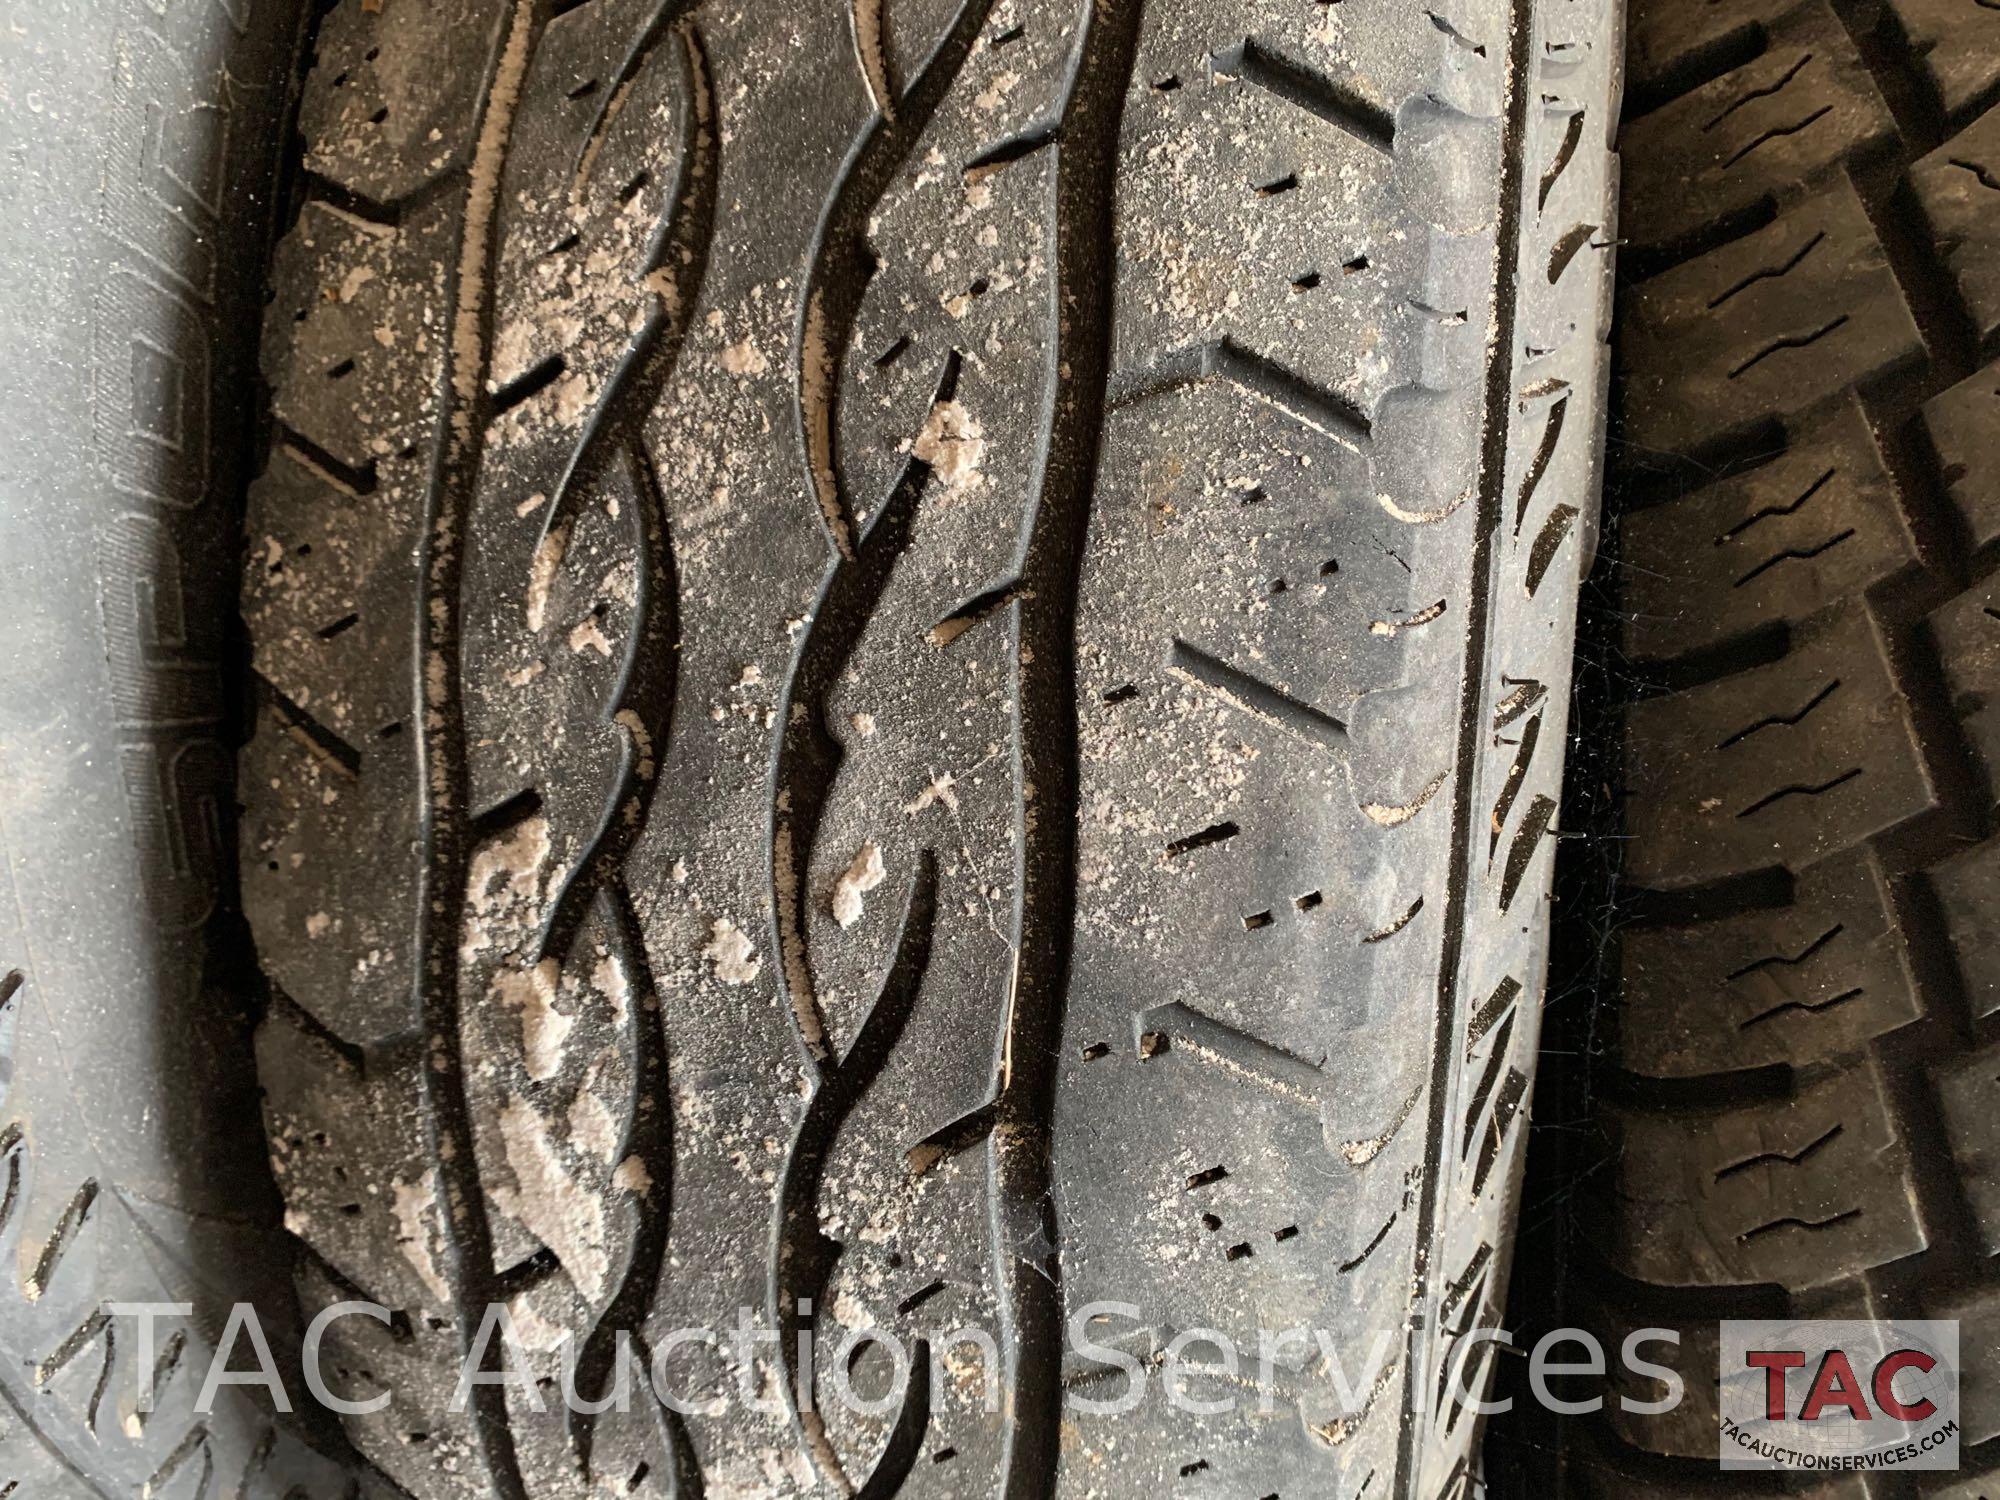 245/75R17 Tires